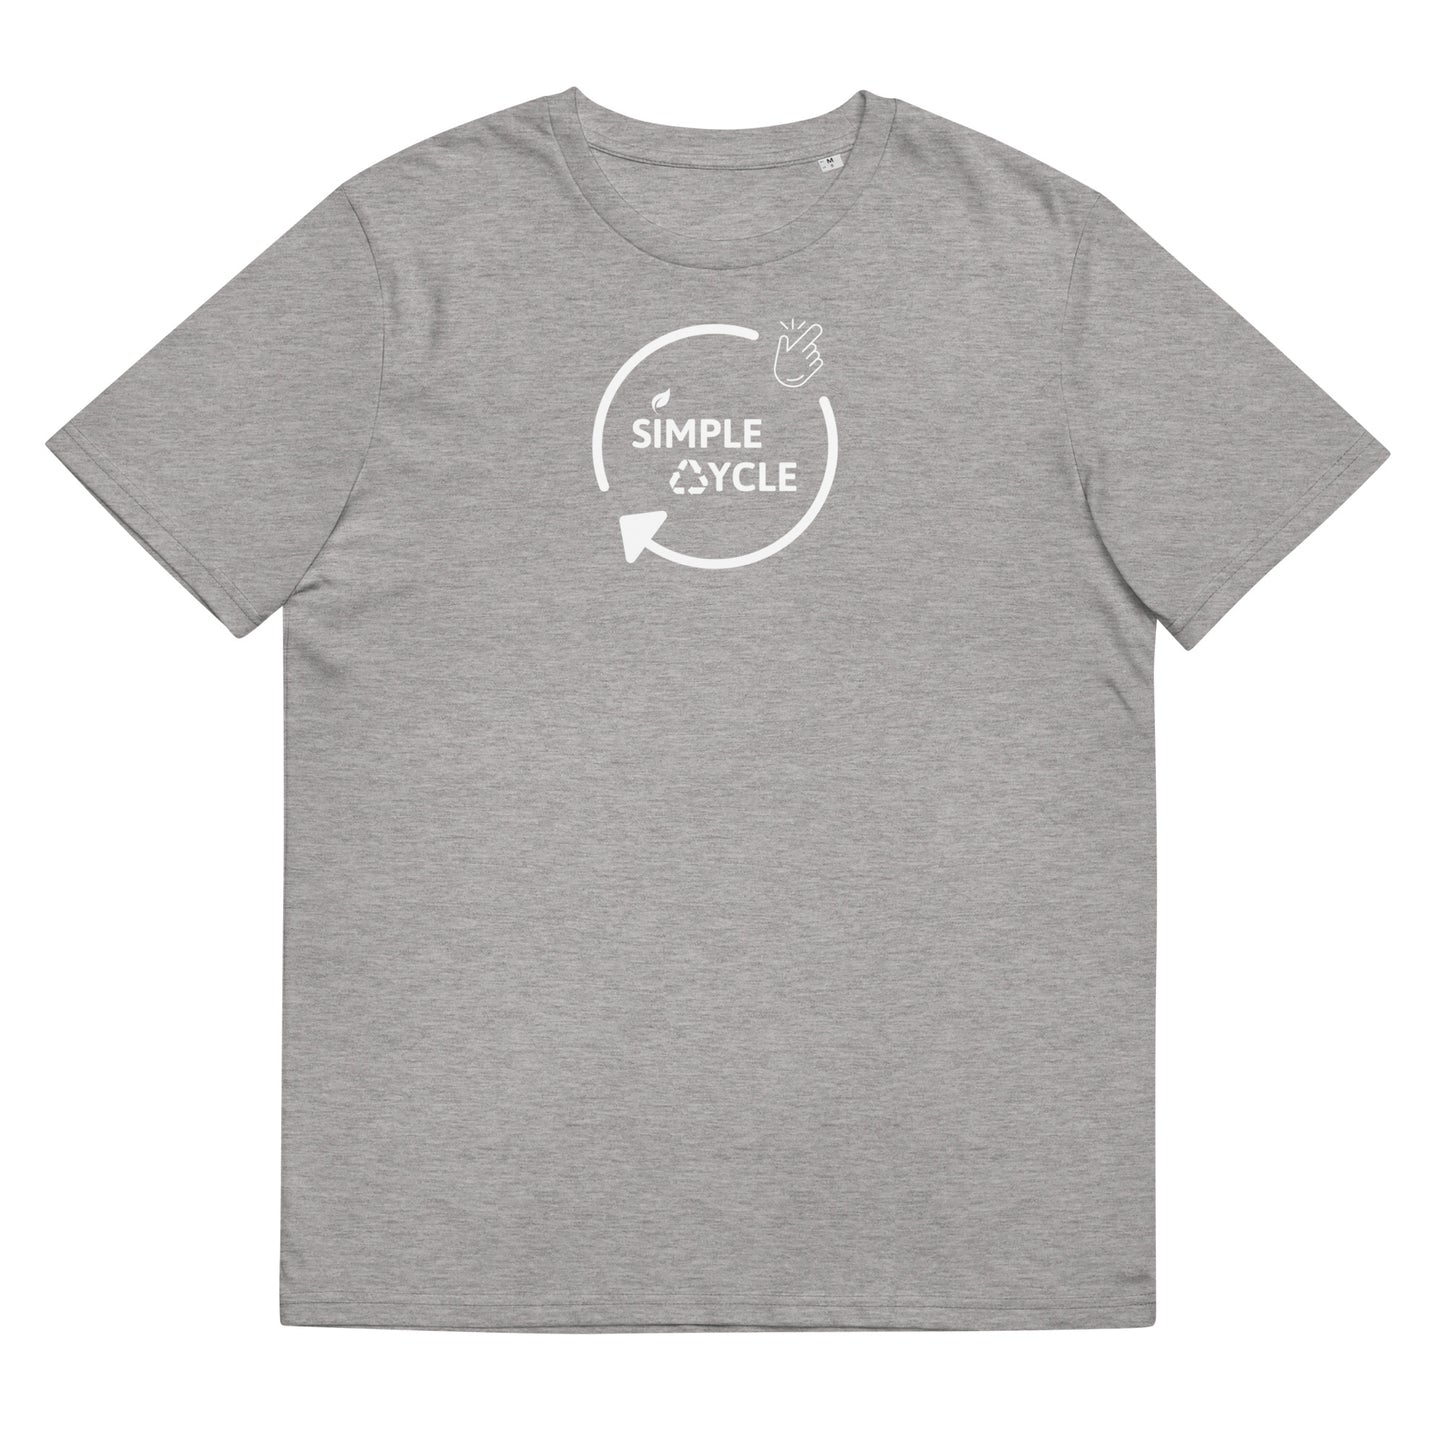 SimpleCycle Unisex Organic Cotton T-Shirt heather grey